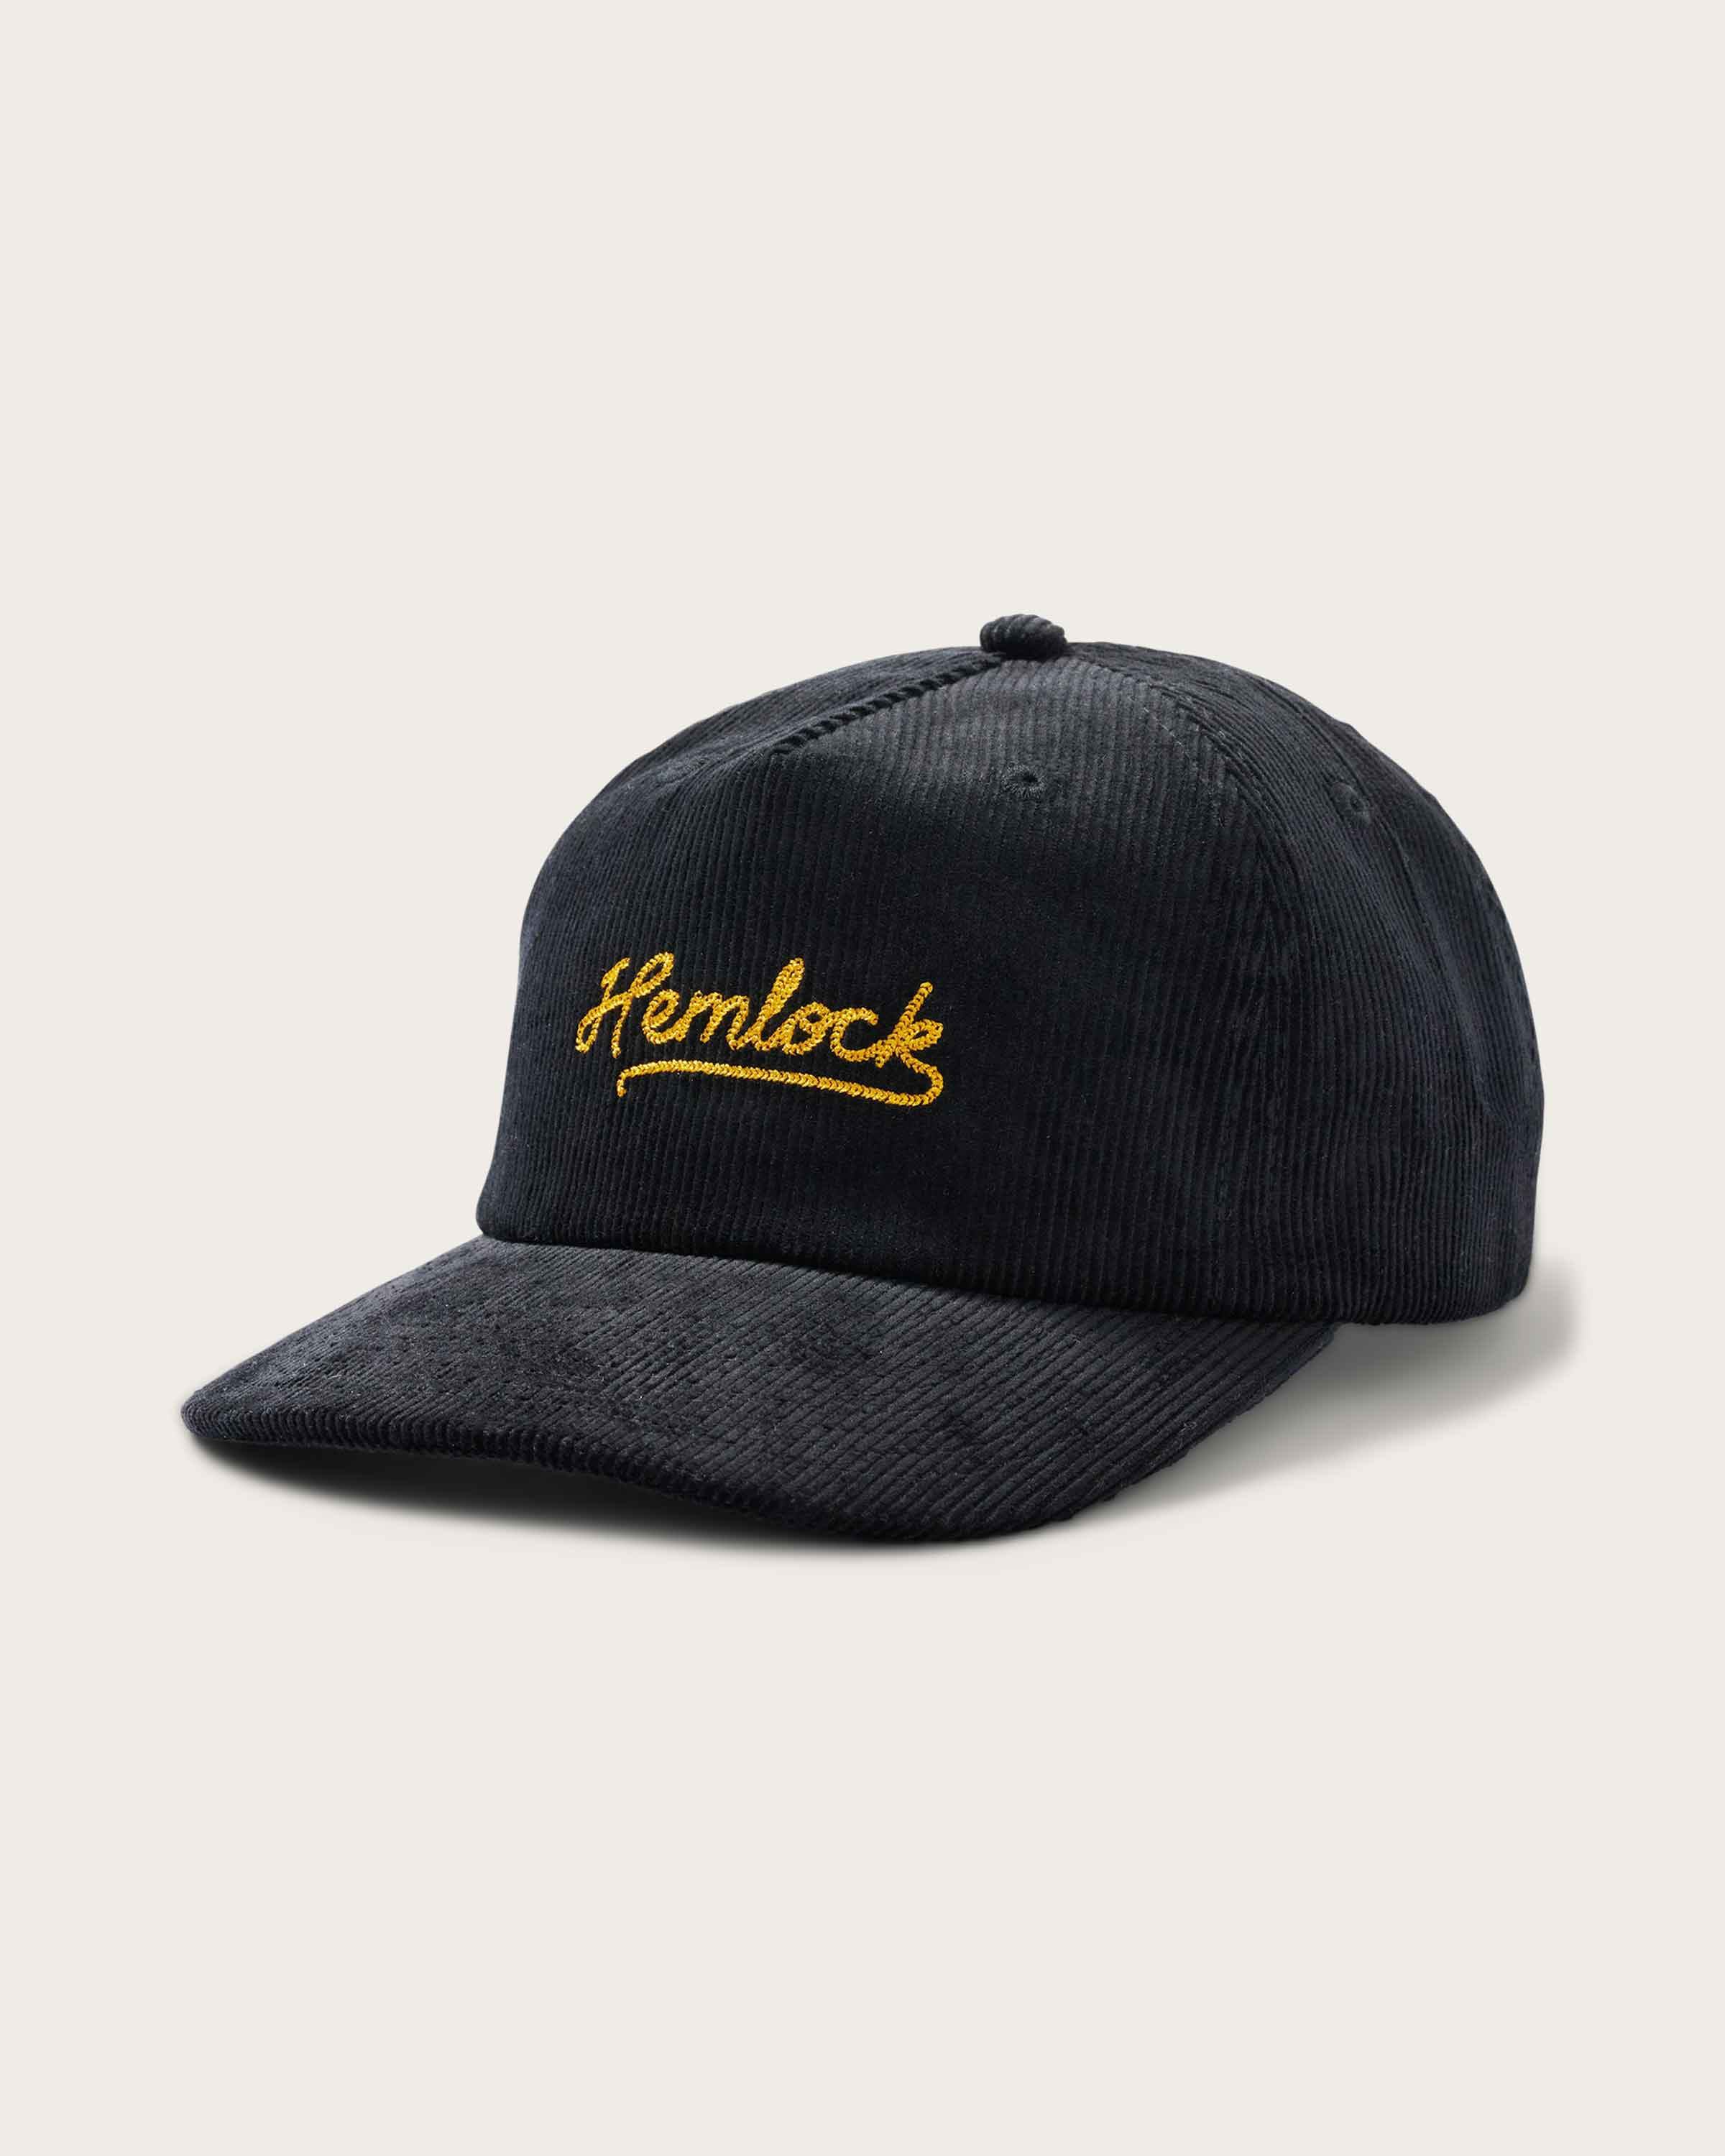 Wesley 5 Panel Hat in Black - undefined - Hemlock Hat Co. Ball Caps